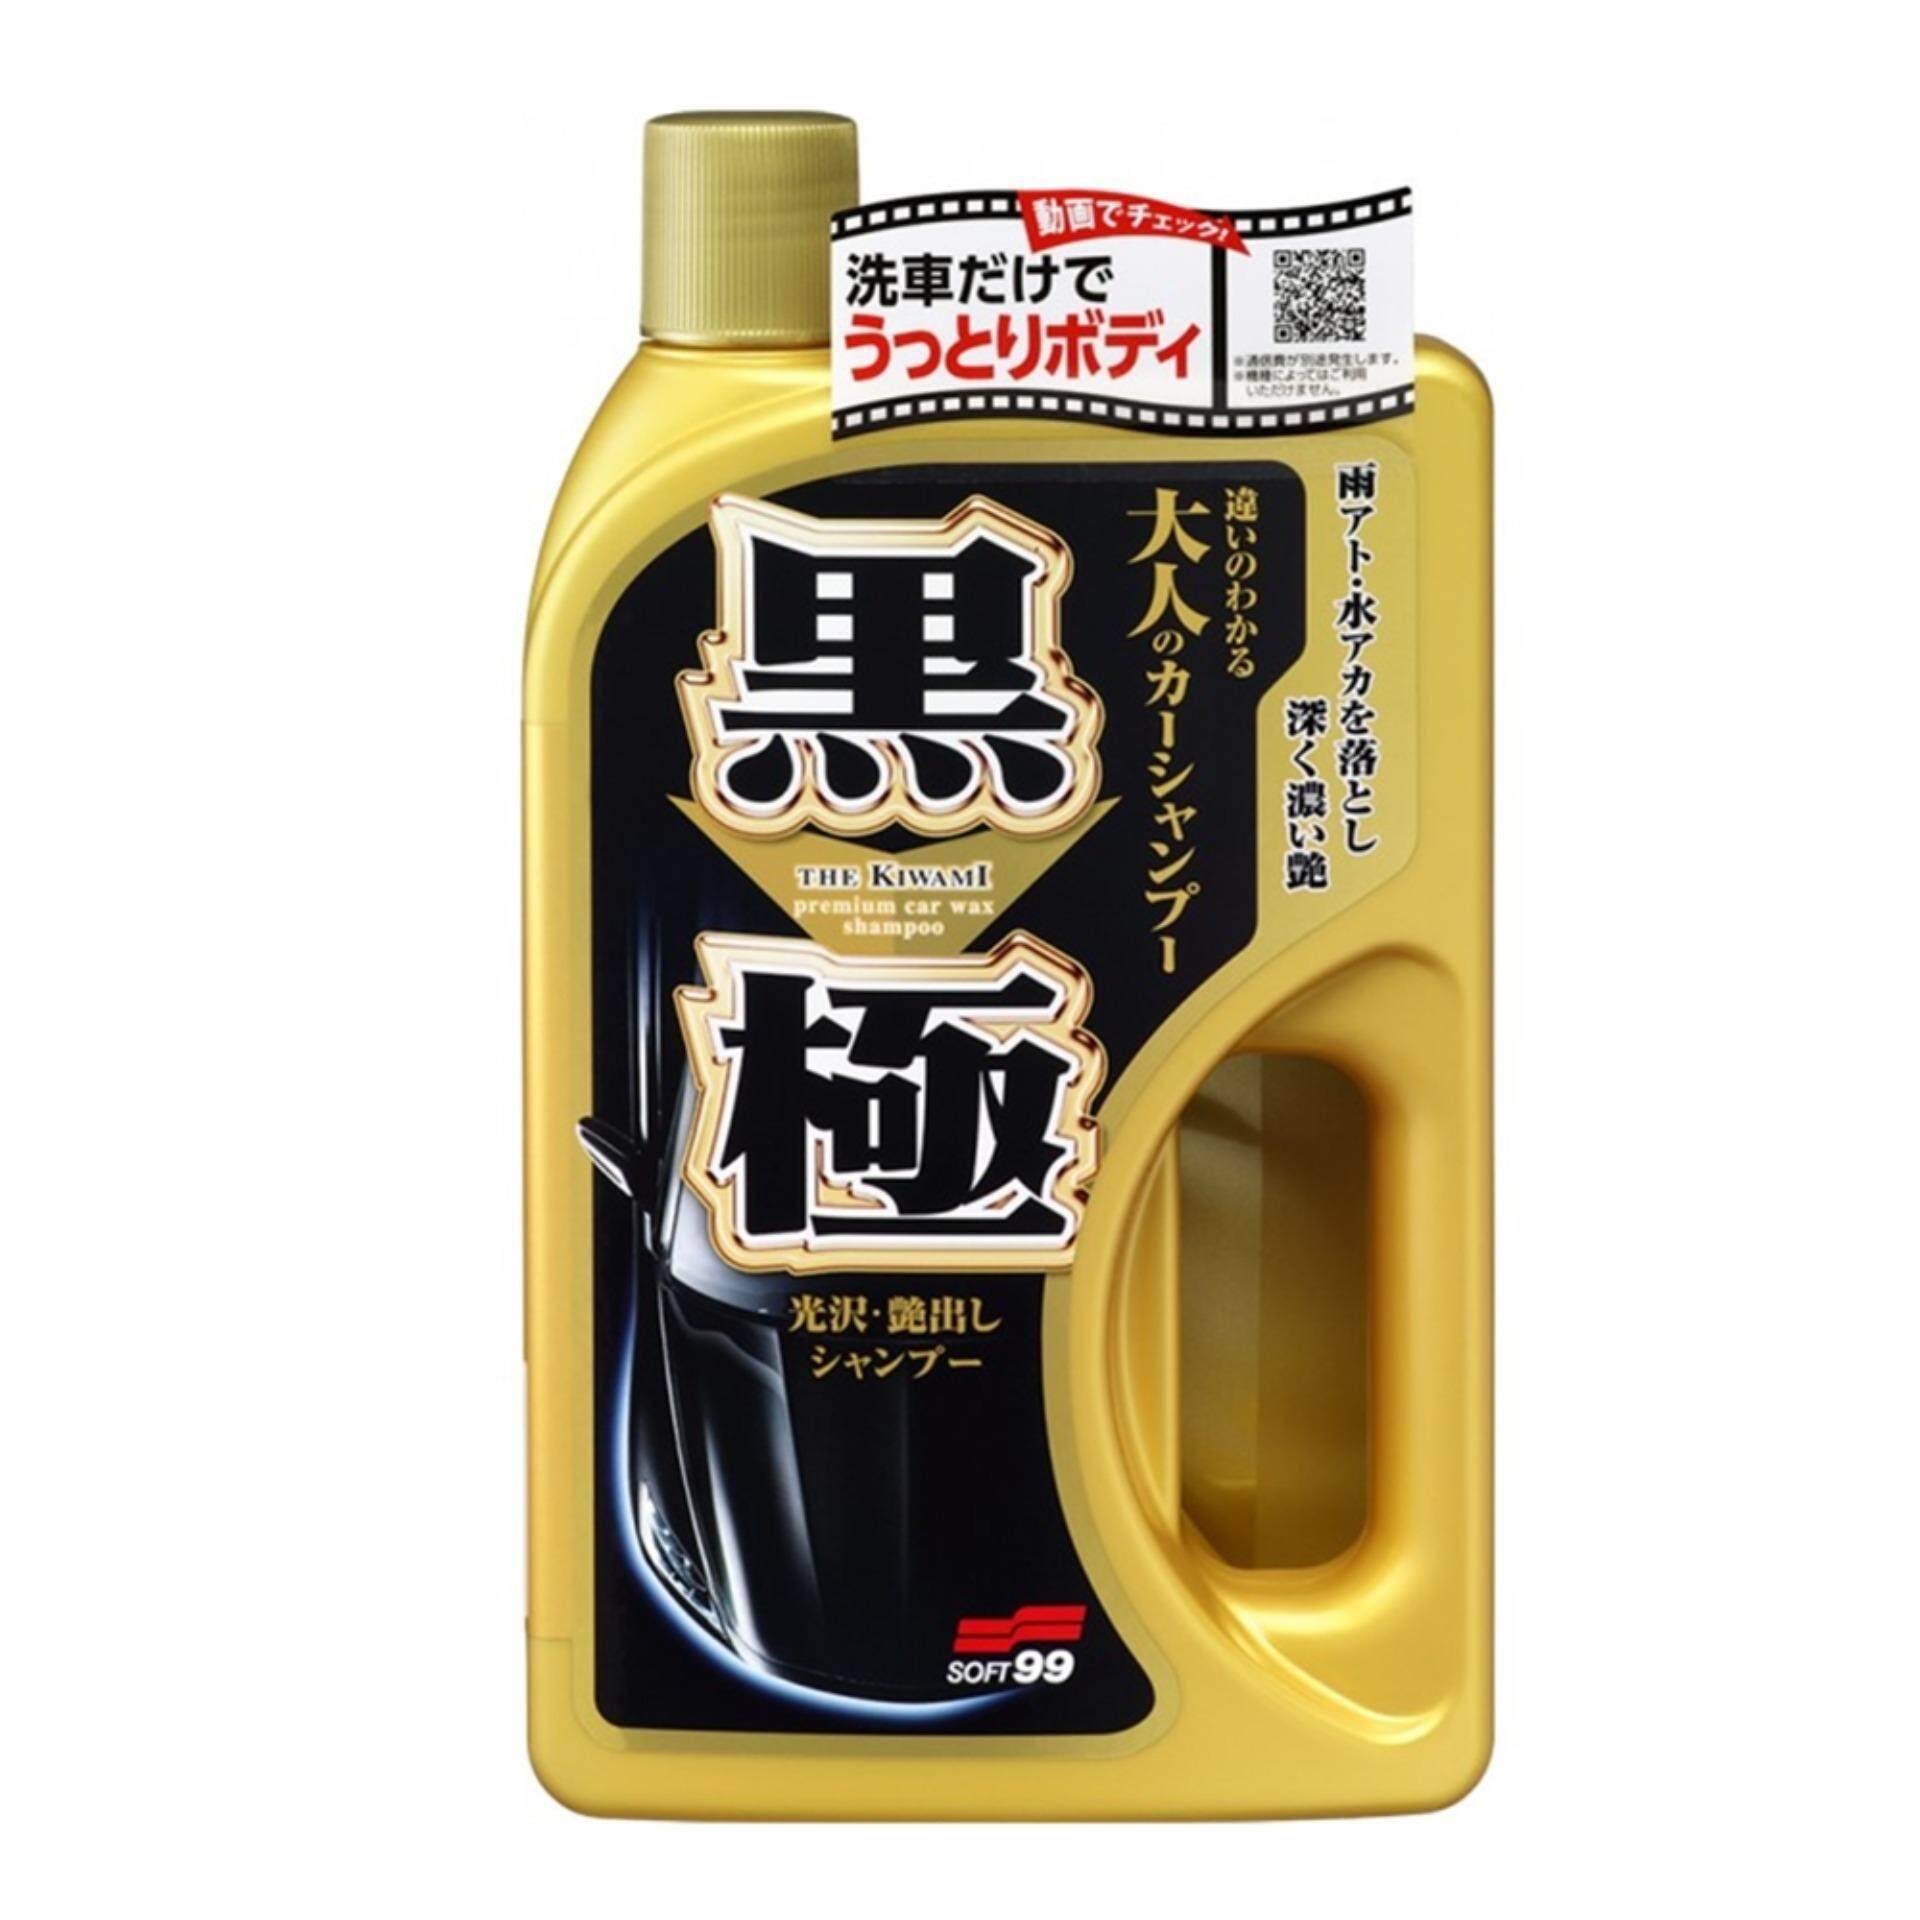 ( Free Gift ) Soft 99 / Soft99 Kiwami Extreme Gloss Car Shampoo For Black Colour Car - 750ML